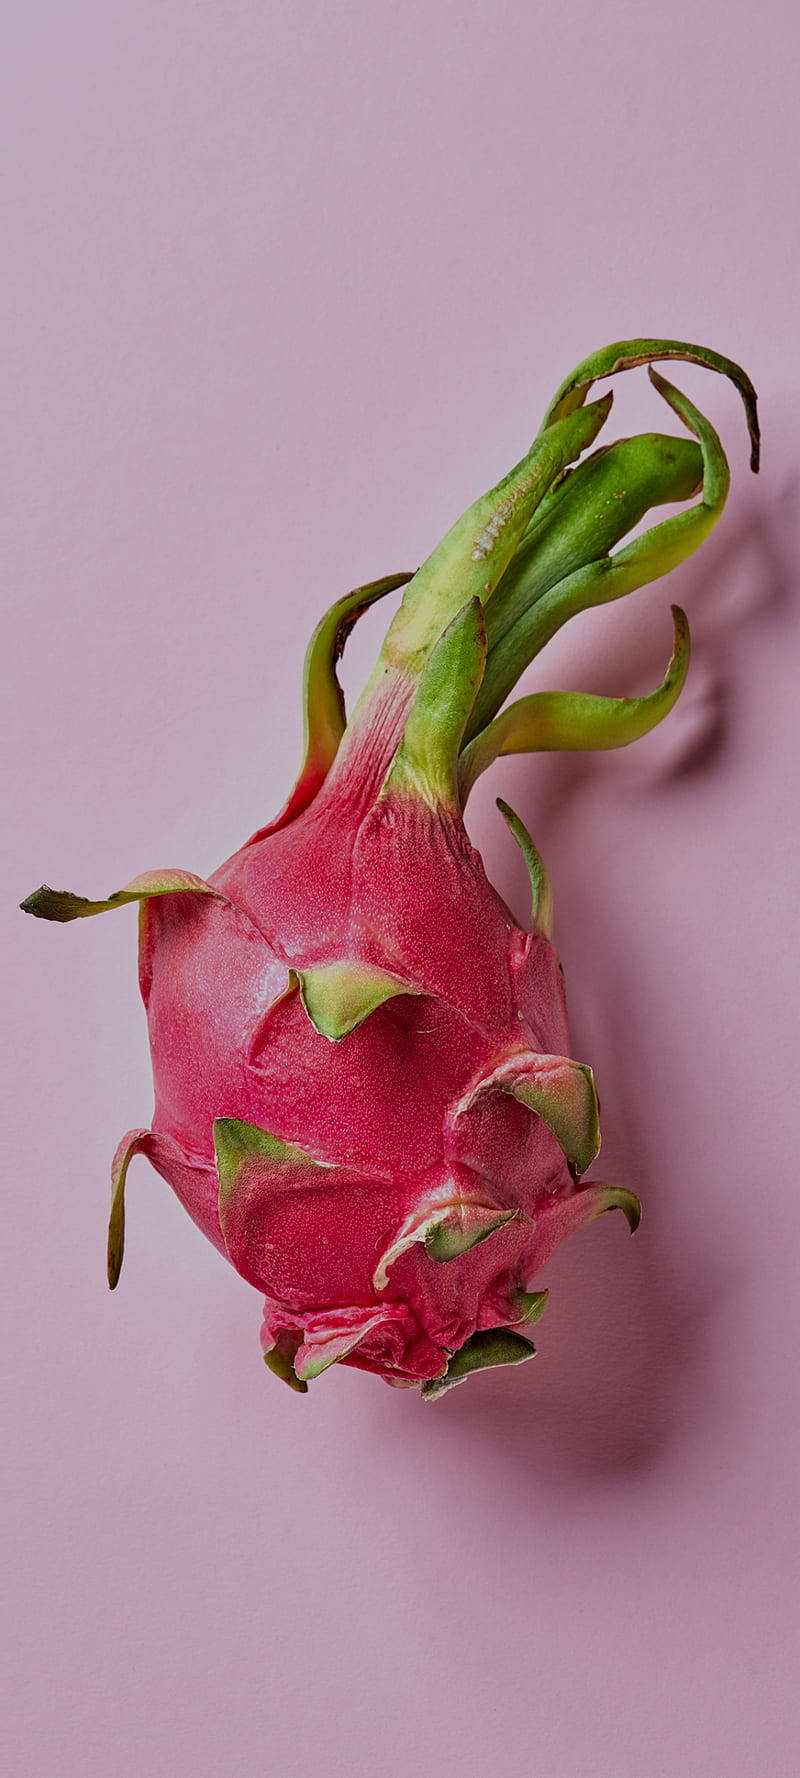 Dragonfruit Fruit Photography Pastel Pink Background Wallpaper